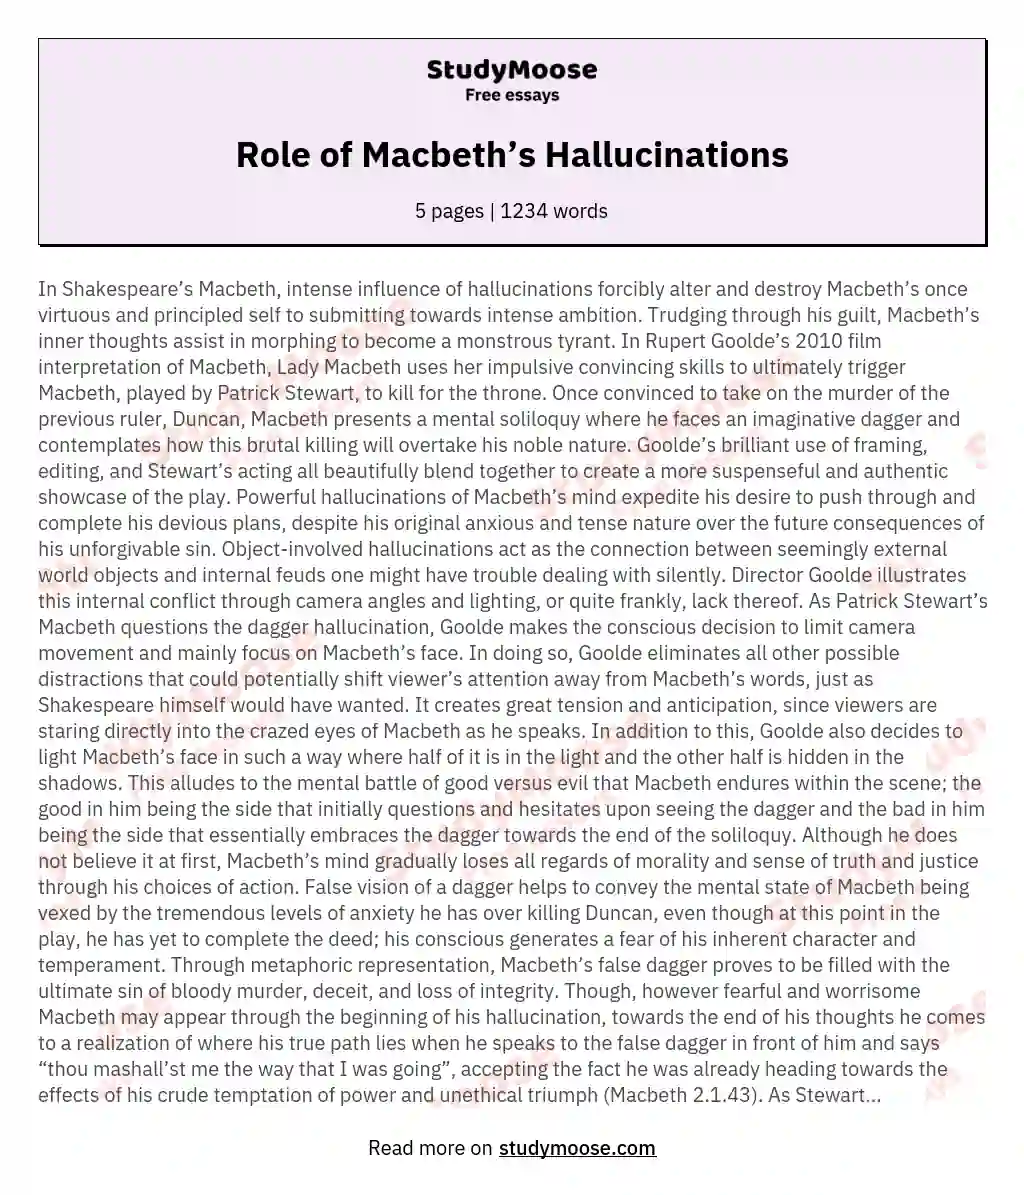 Role of Macbeth’s Hallucinations